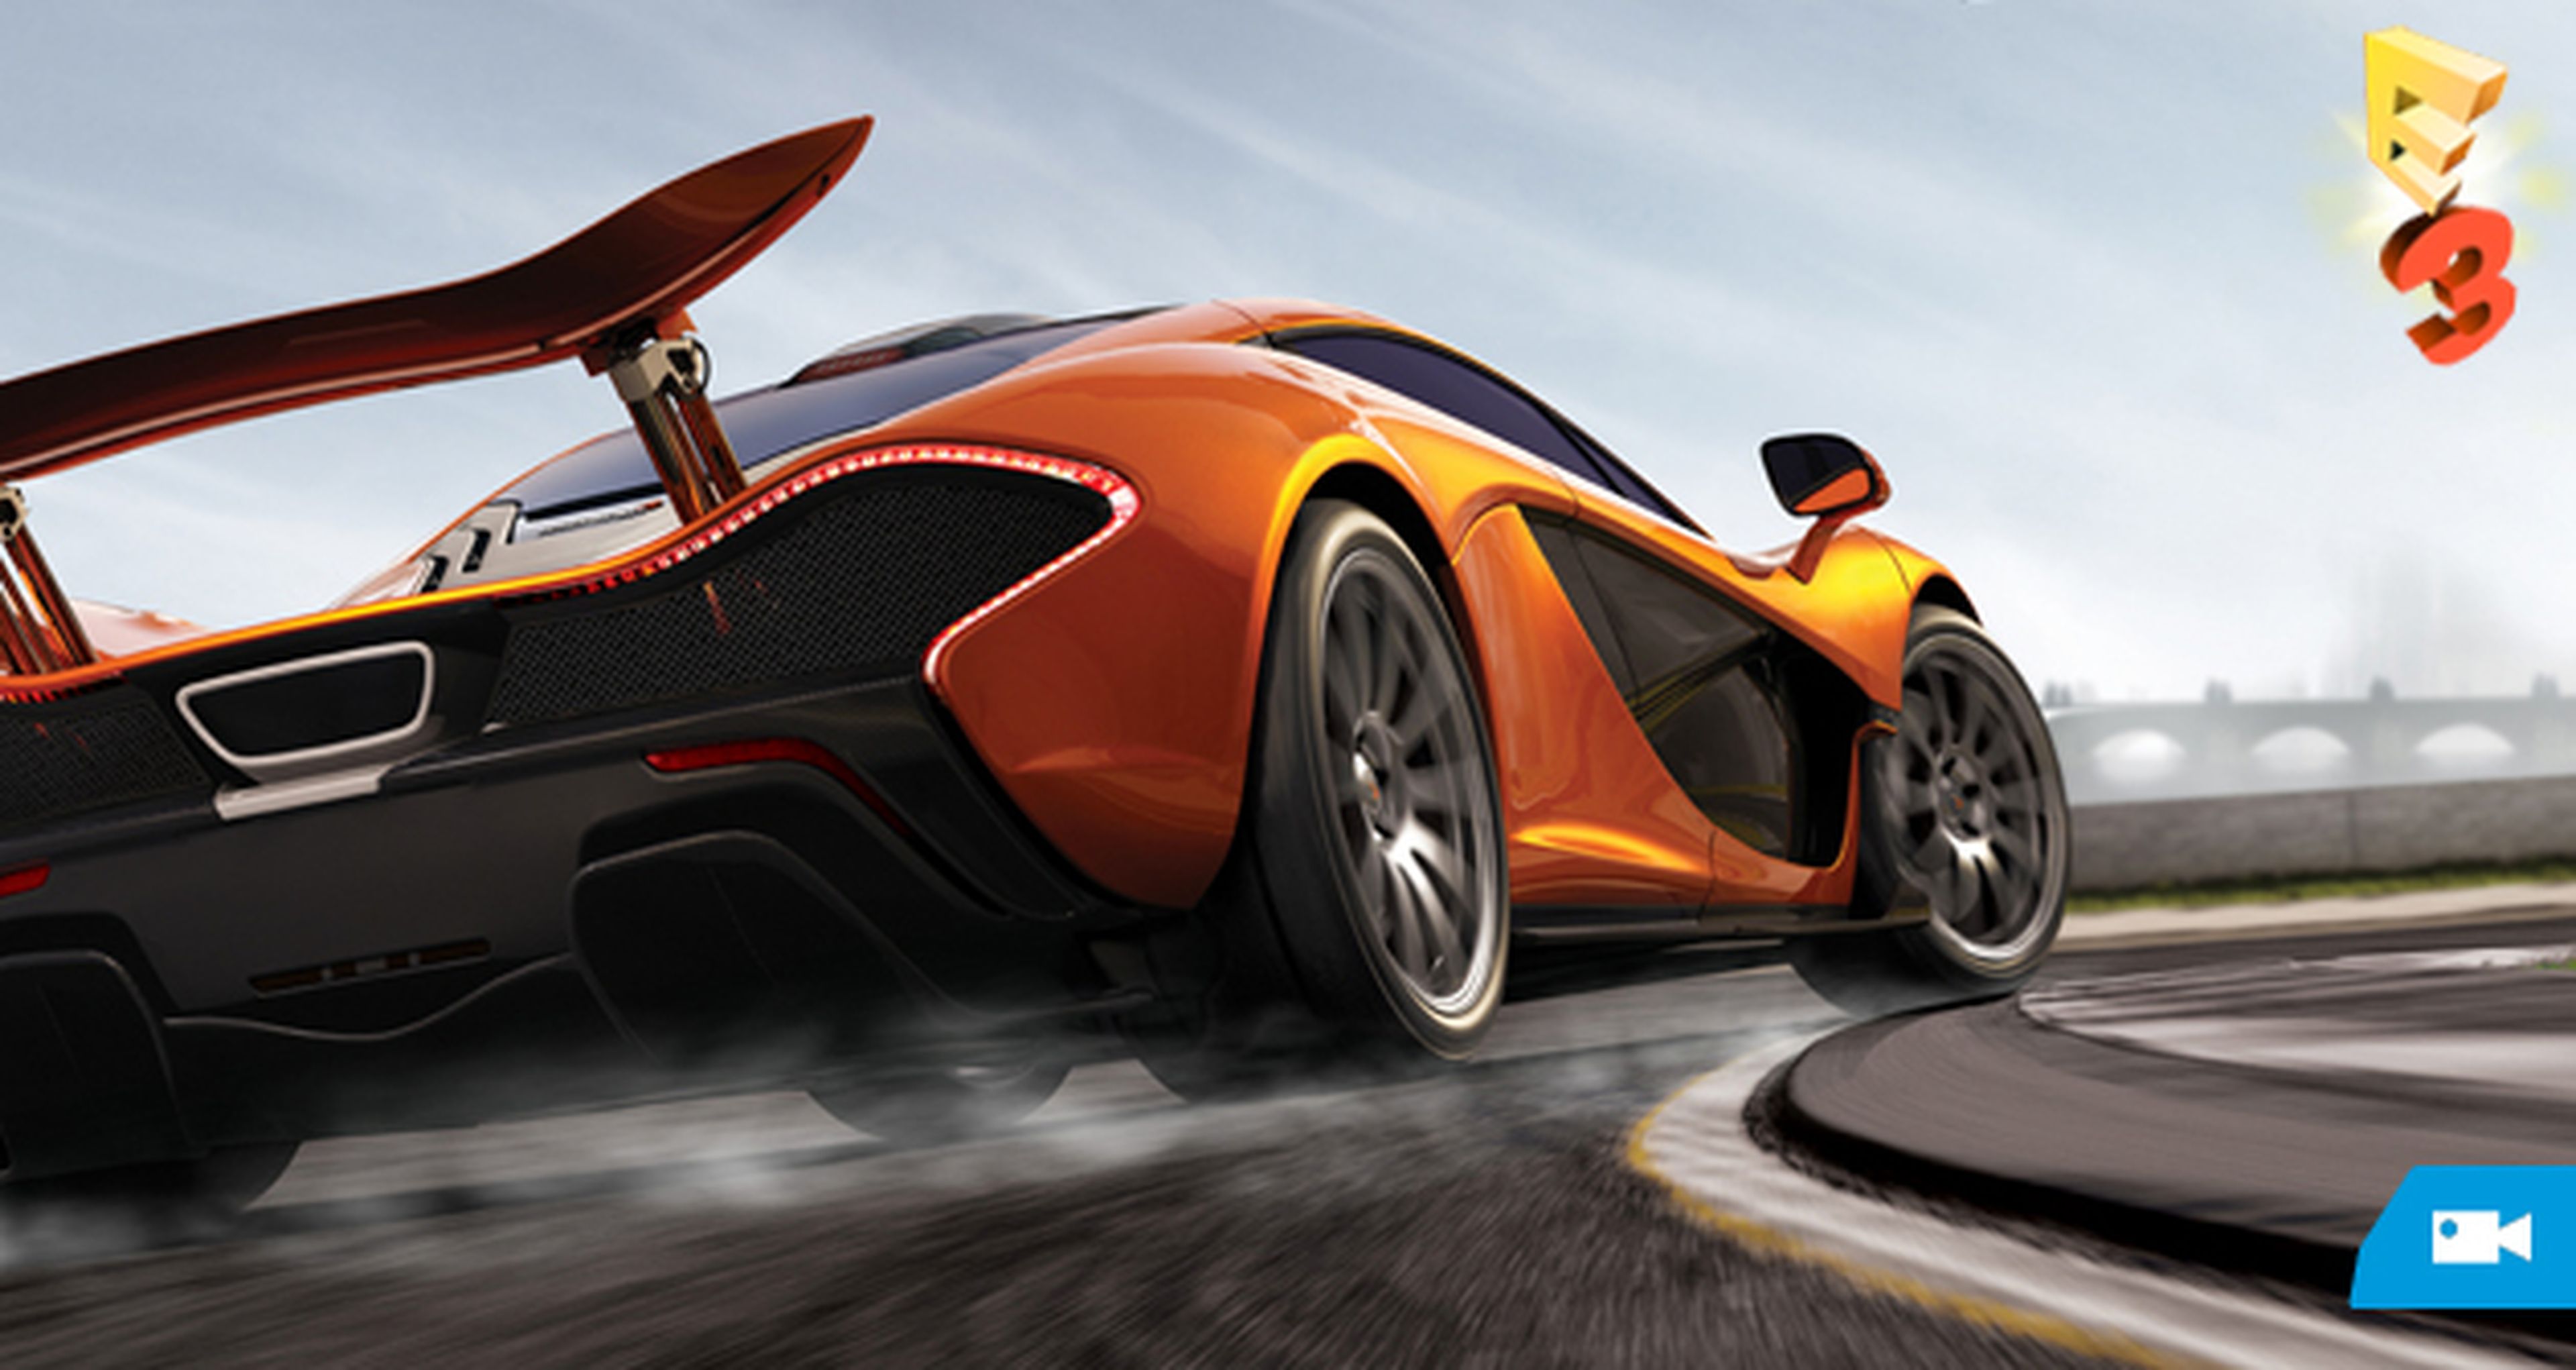 E3 2013: Nuevo trailer de Forza Motorsport 5